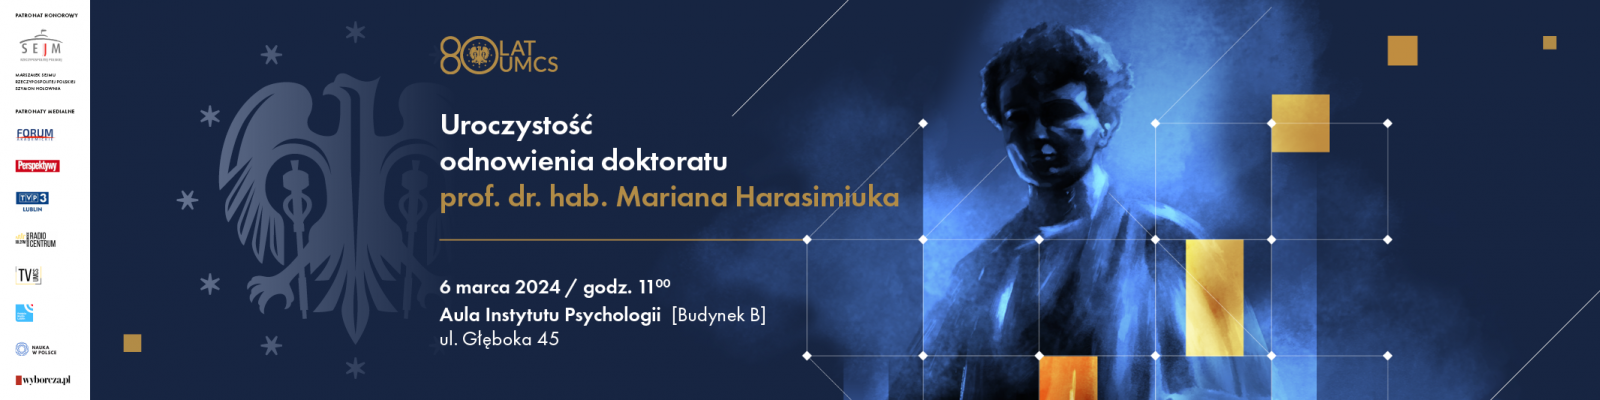 Odnowienie doktoratu prof. dr. hab. Mariana Harasimiuka